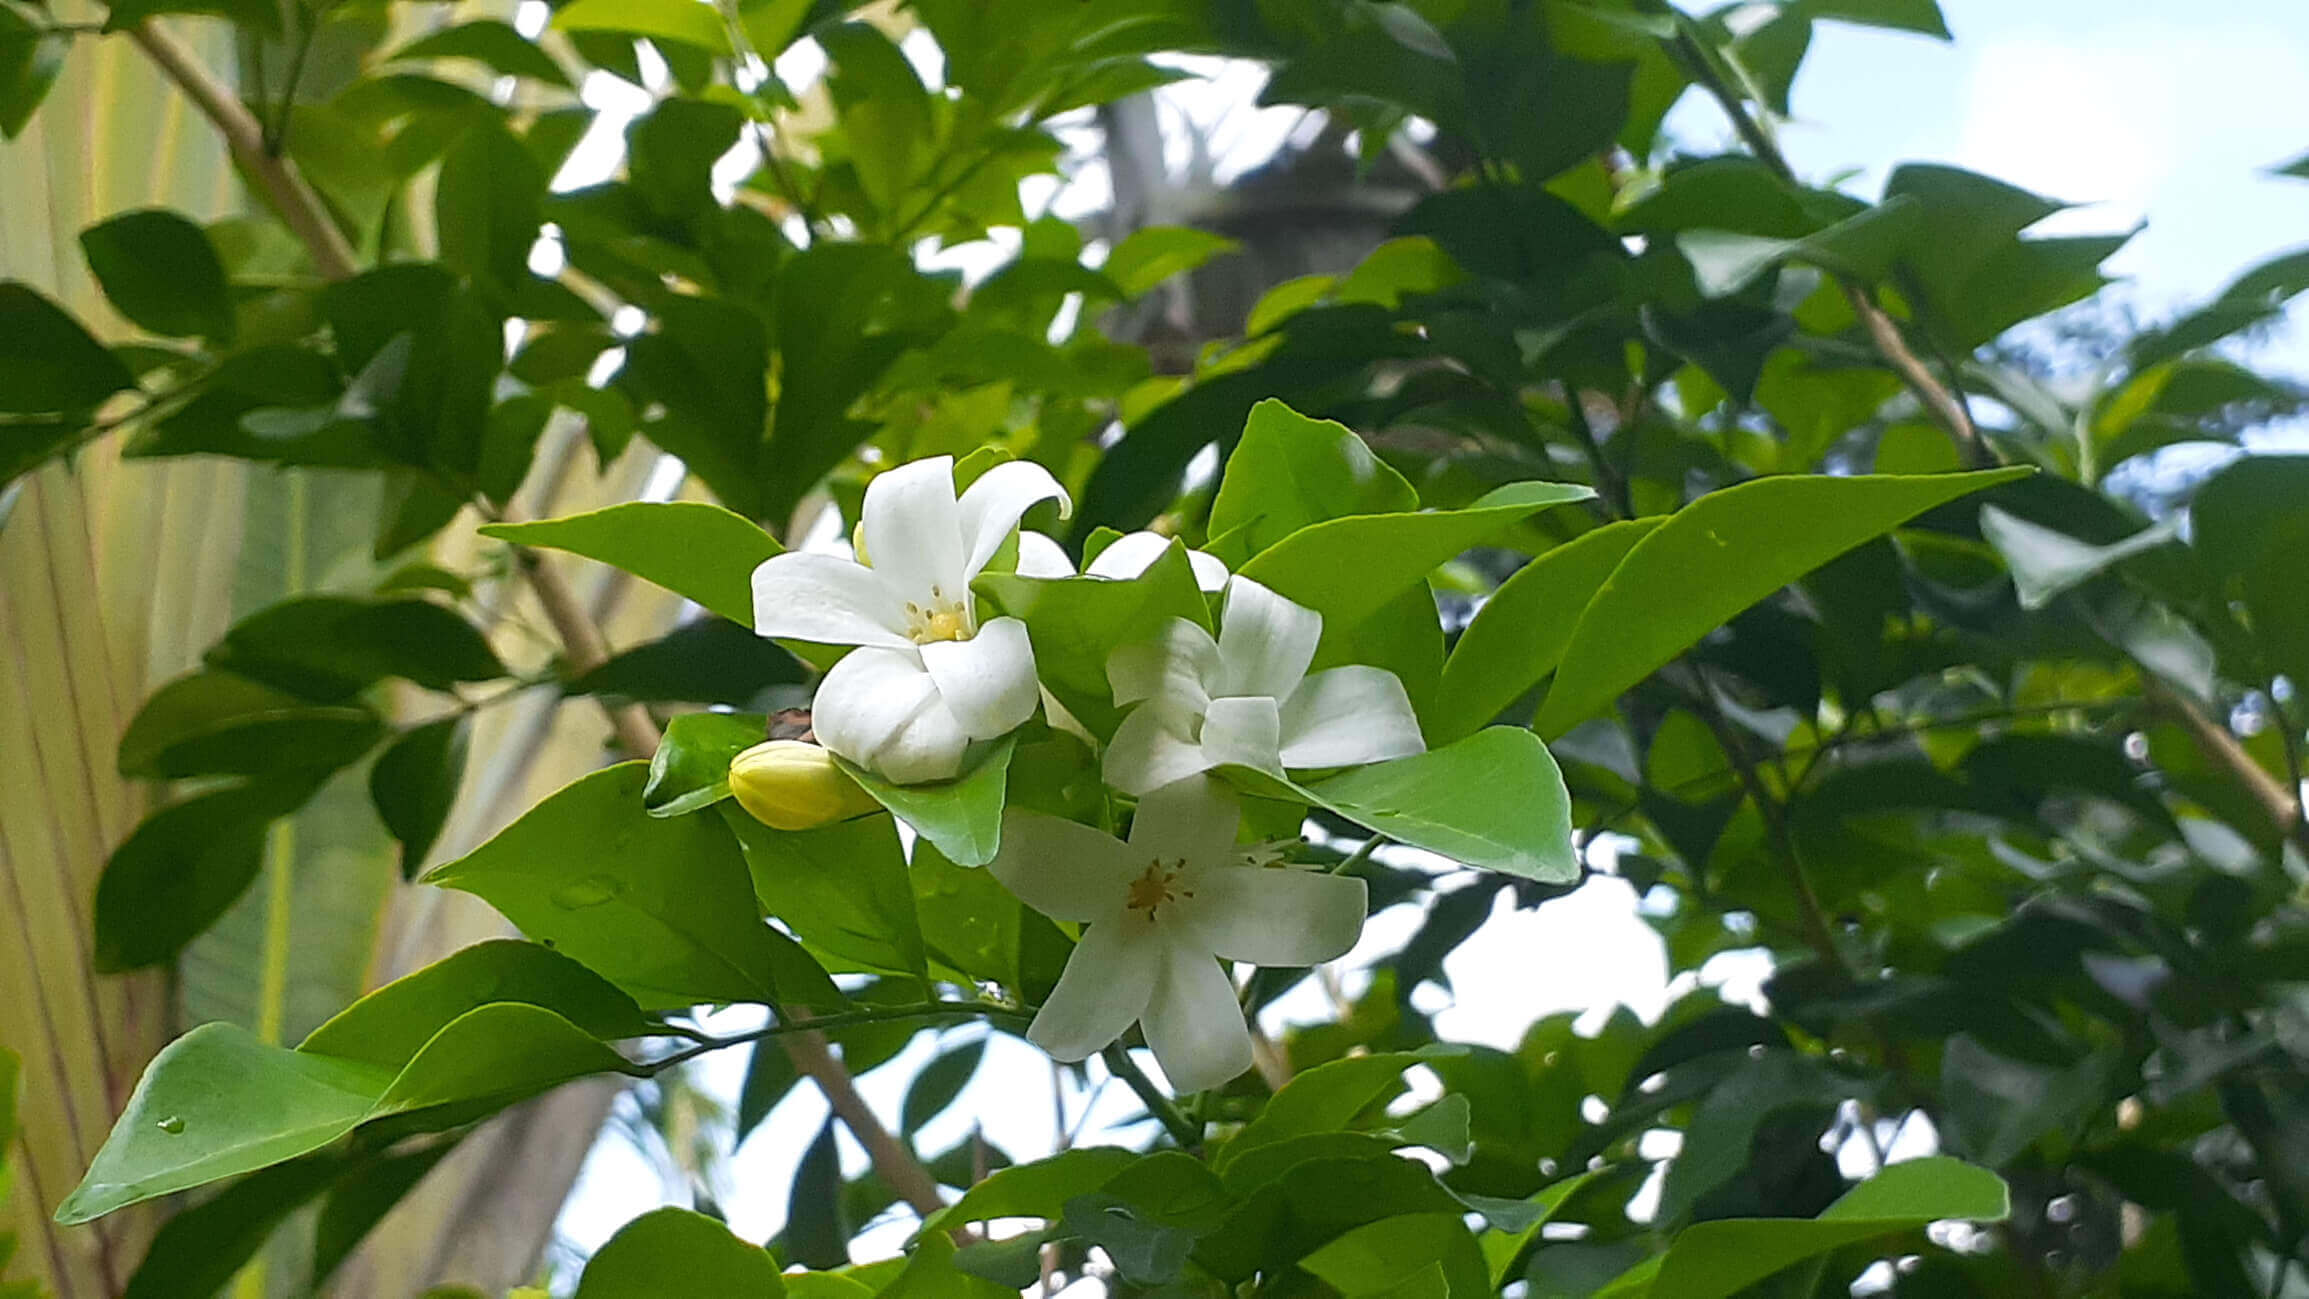 Murraya plant with white flower